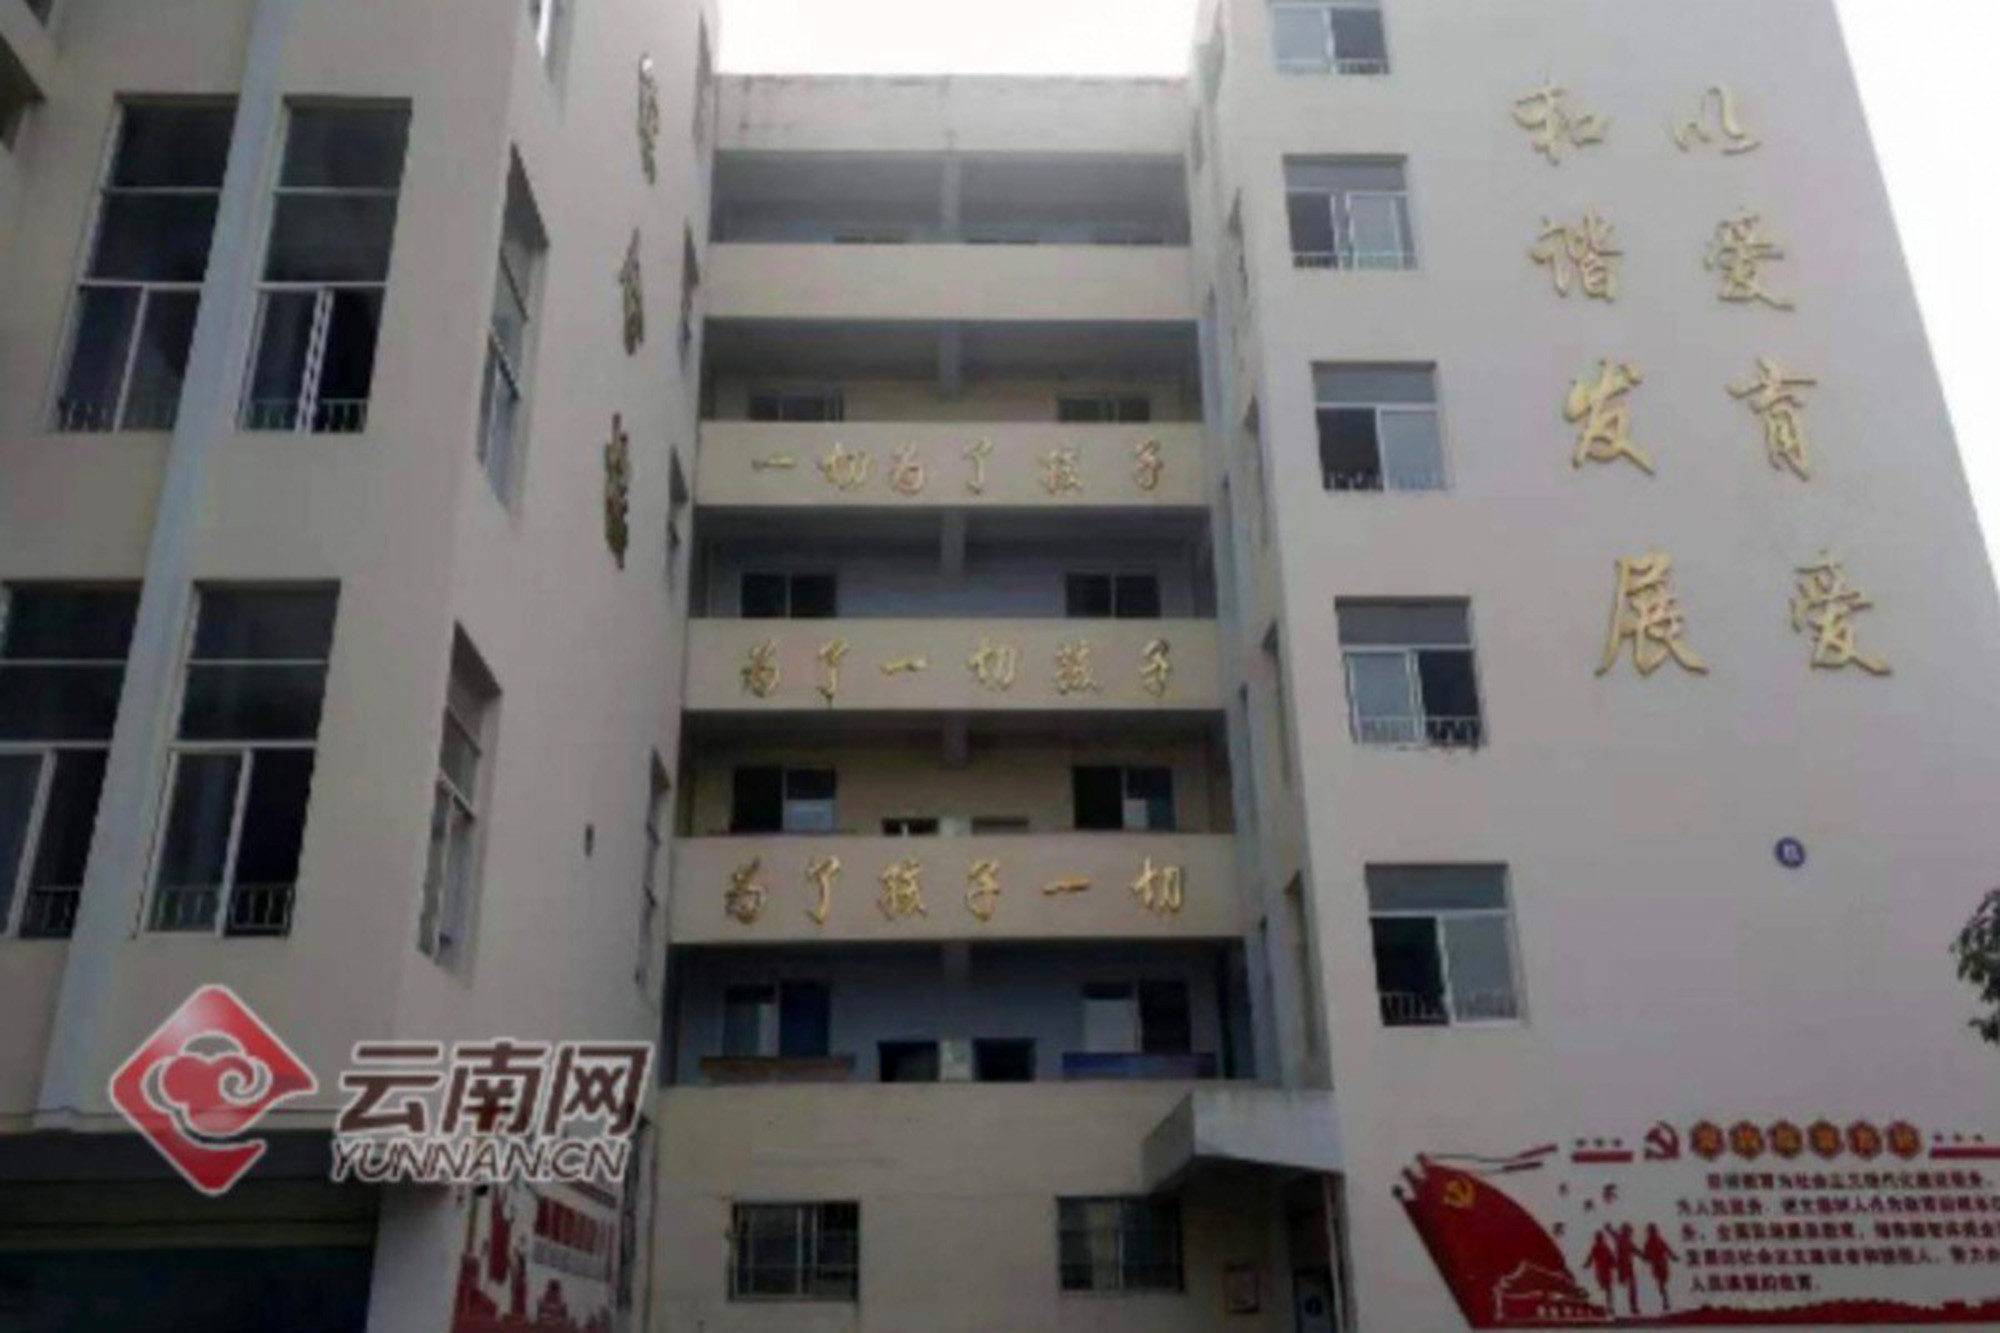 Dongcheng Kindergarten in China